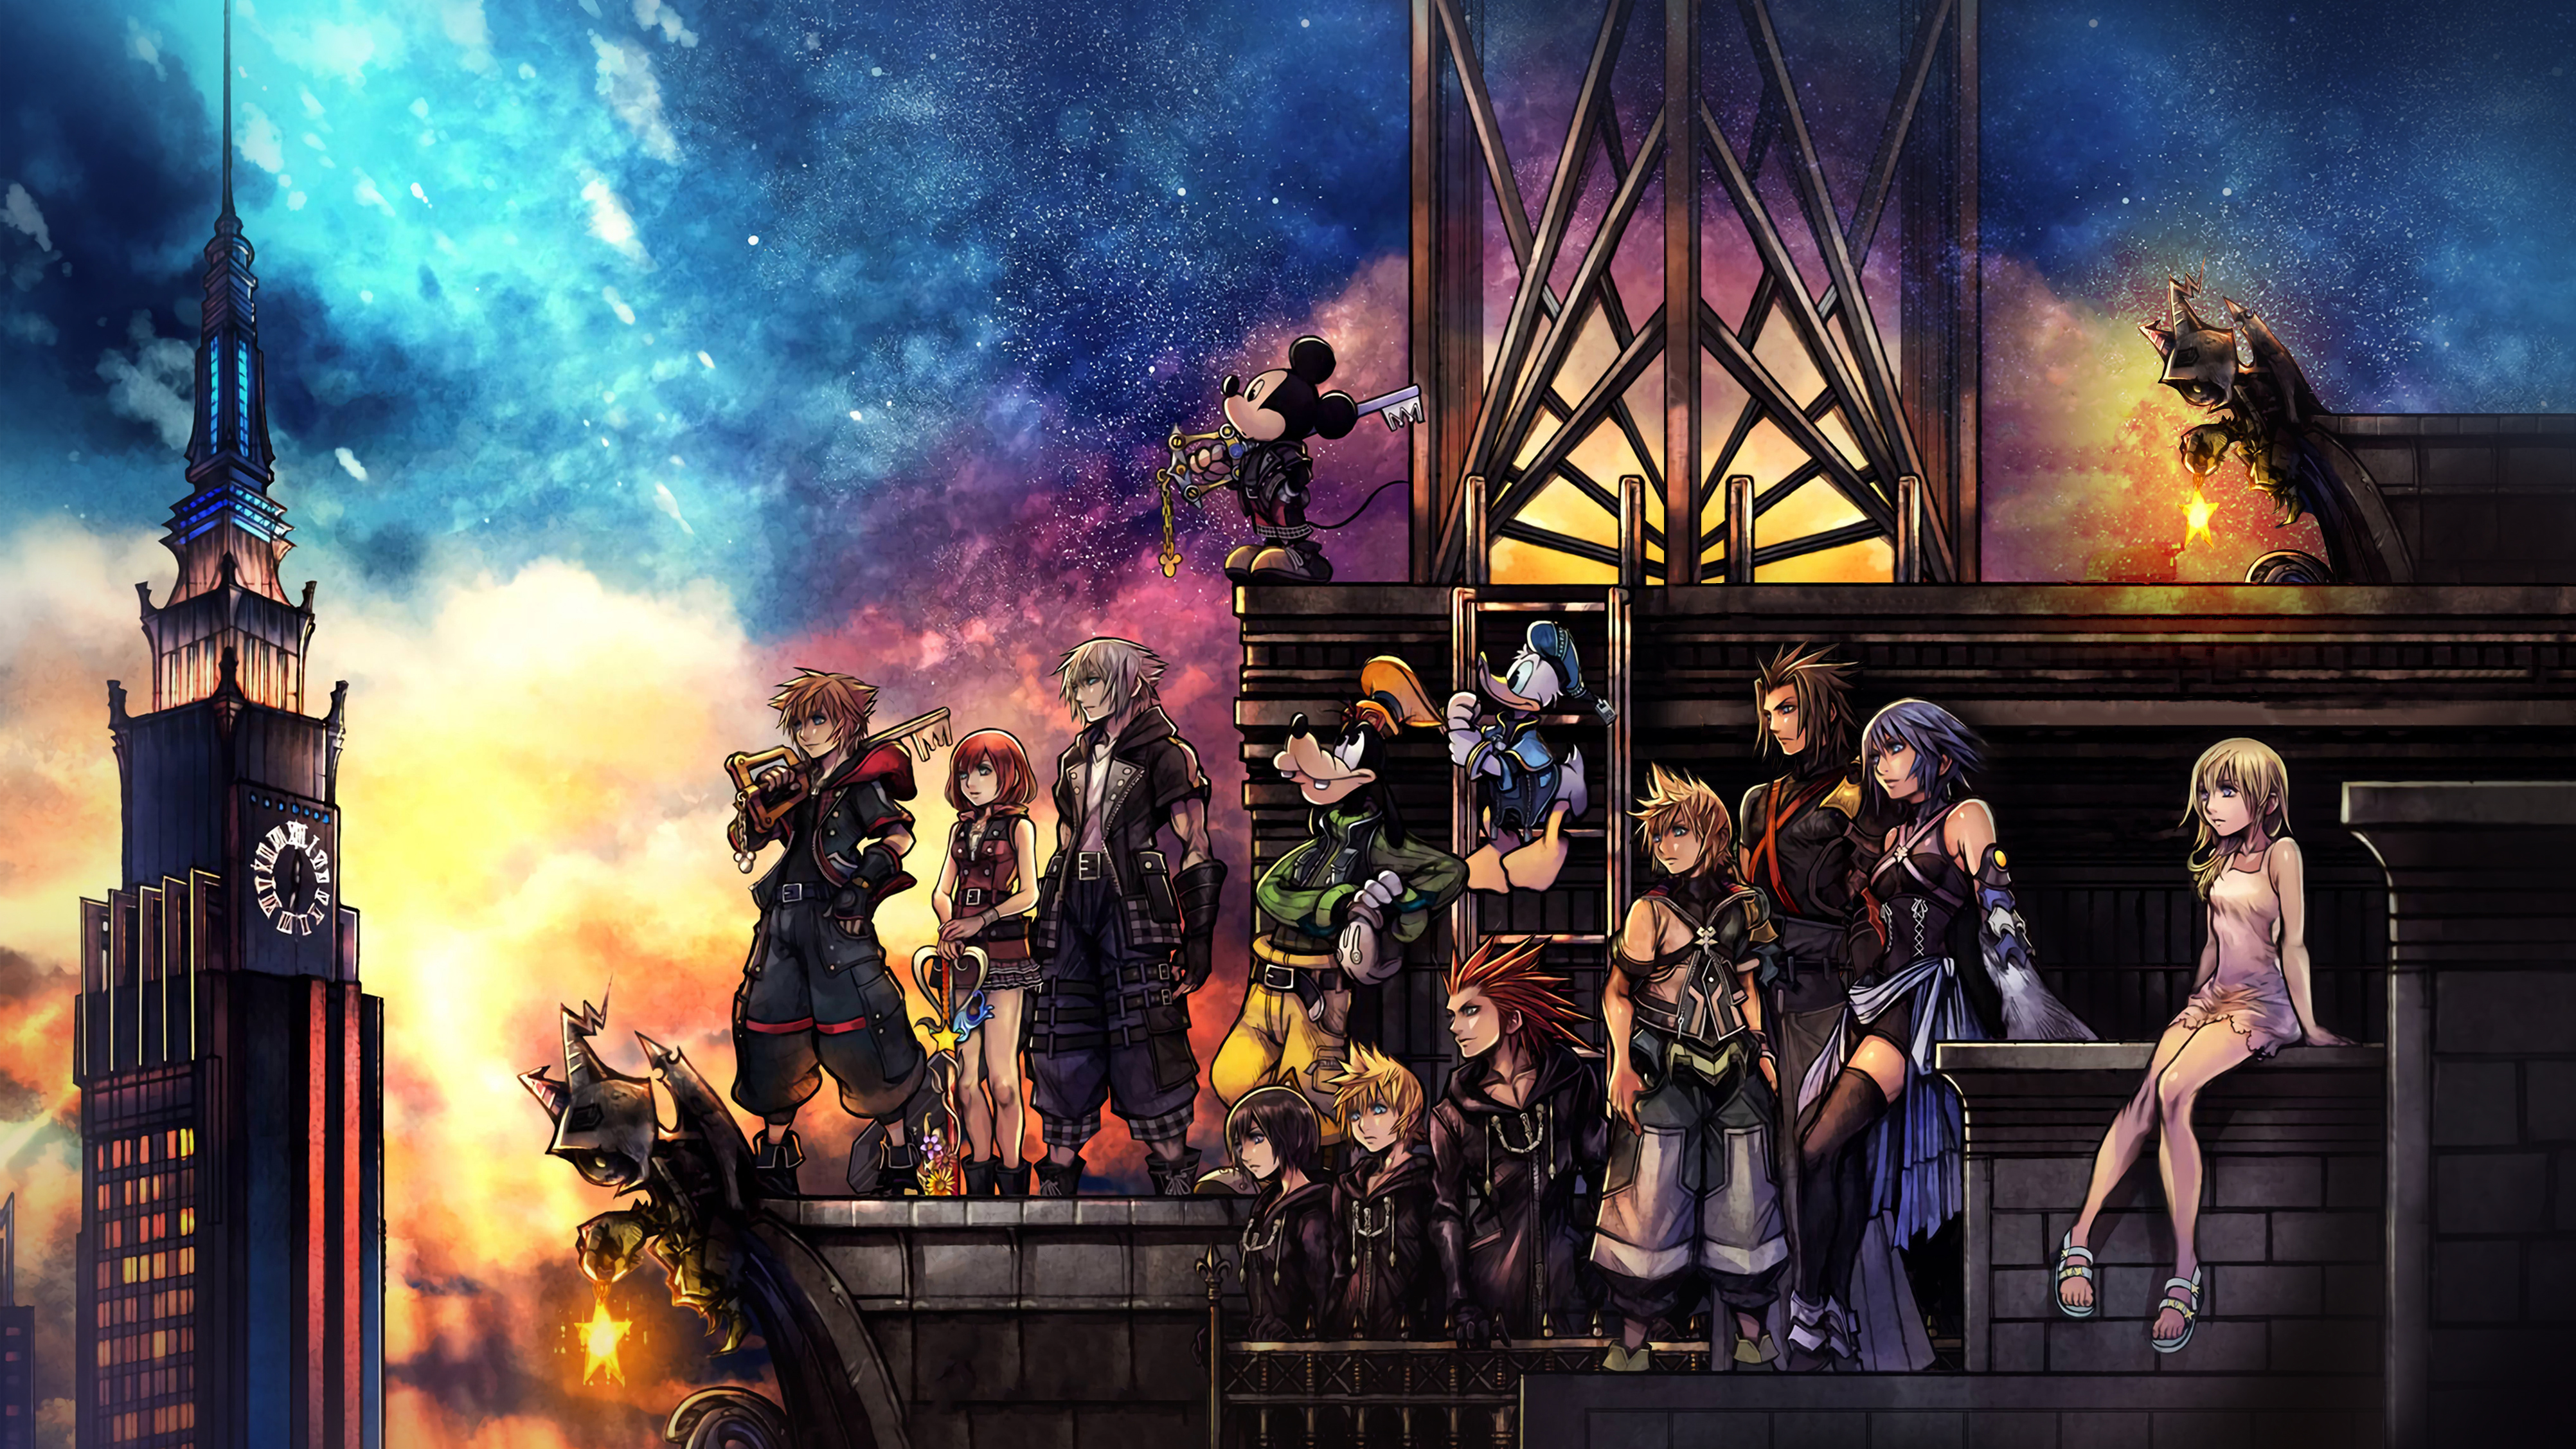 Kingdom Hearts Iii 4k Ultra HD Wallpaper Background Image